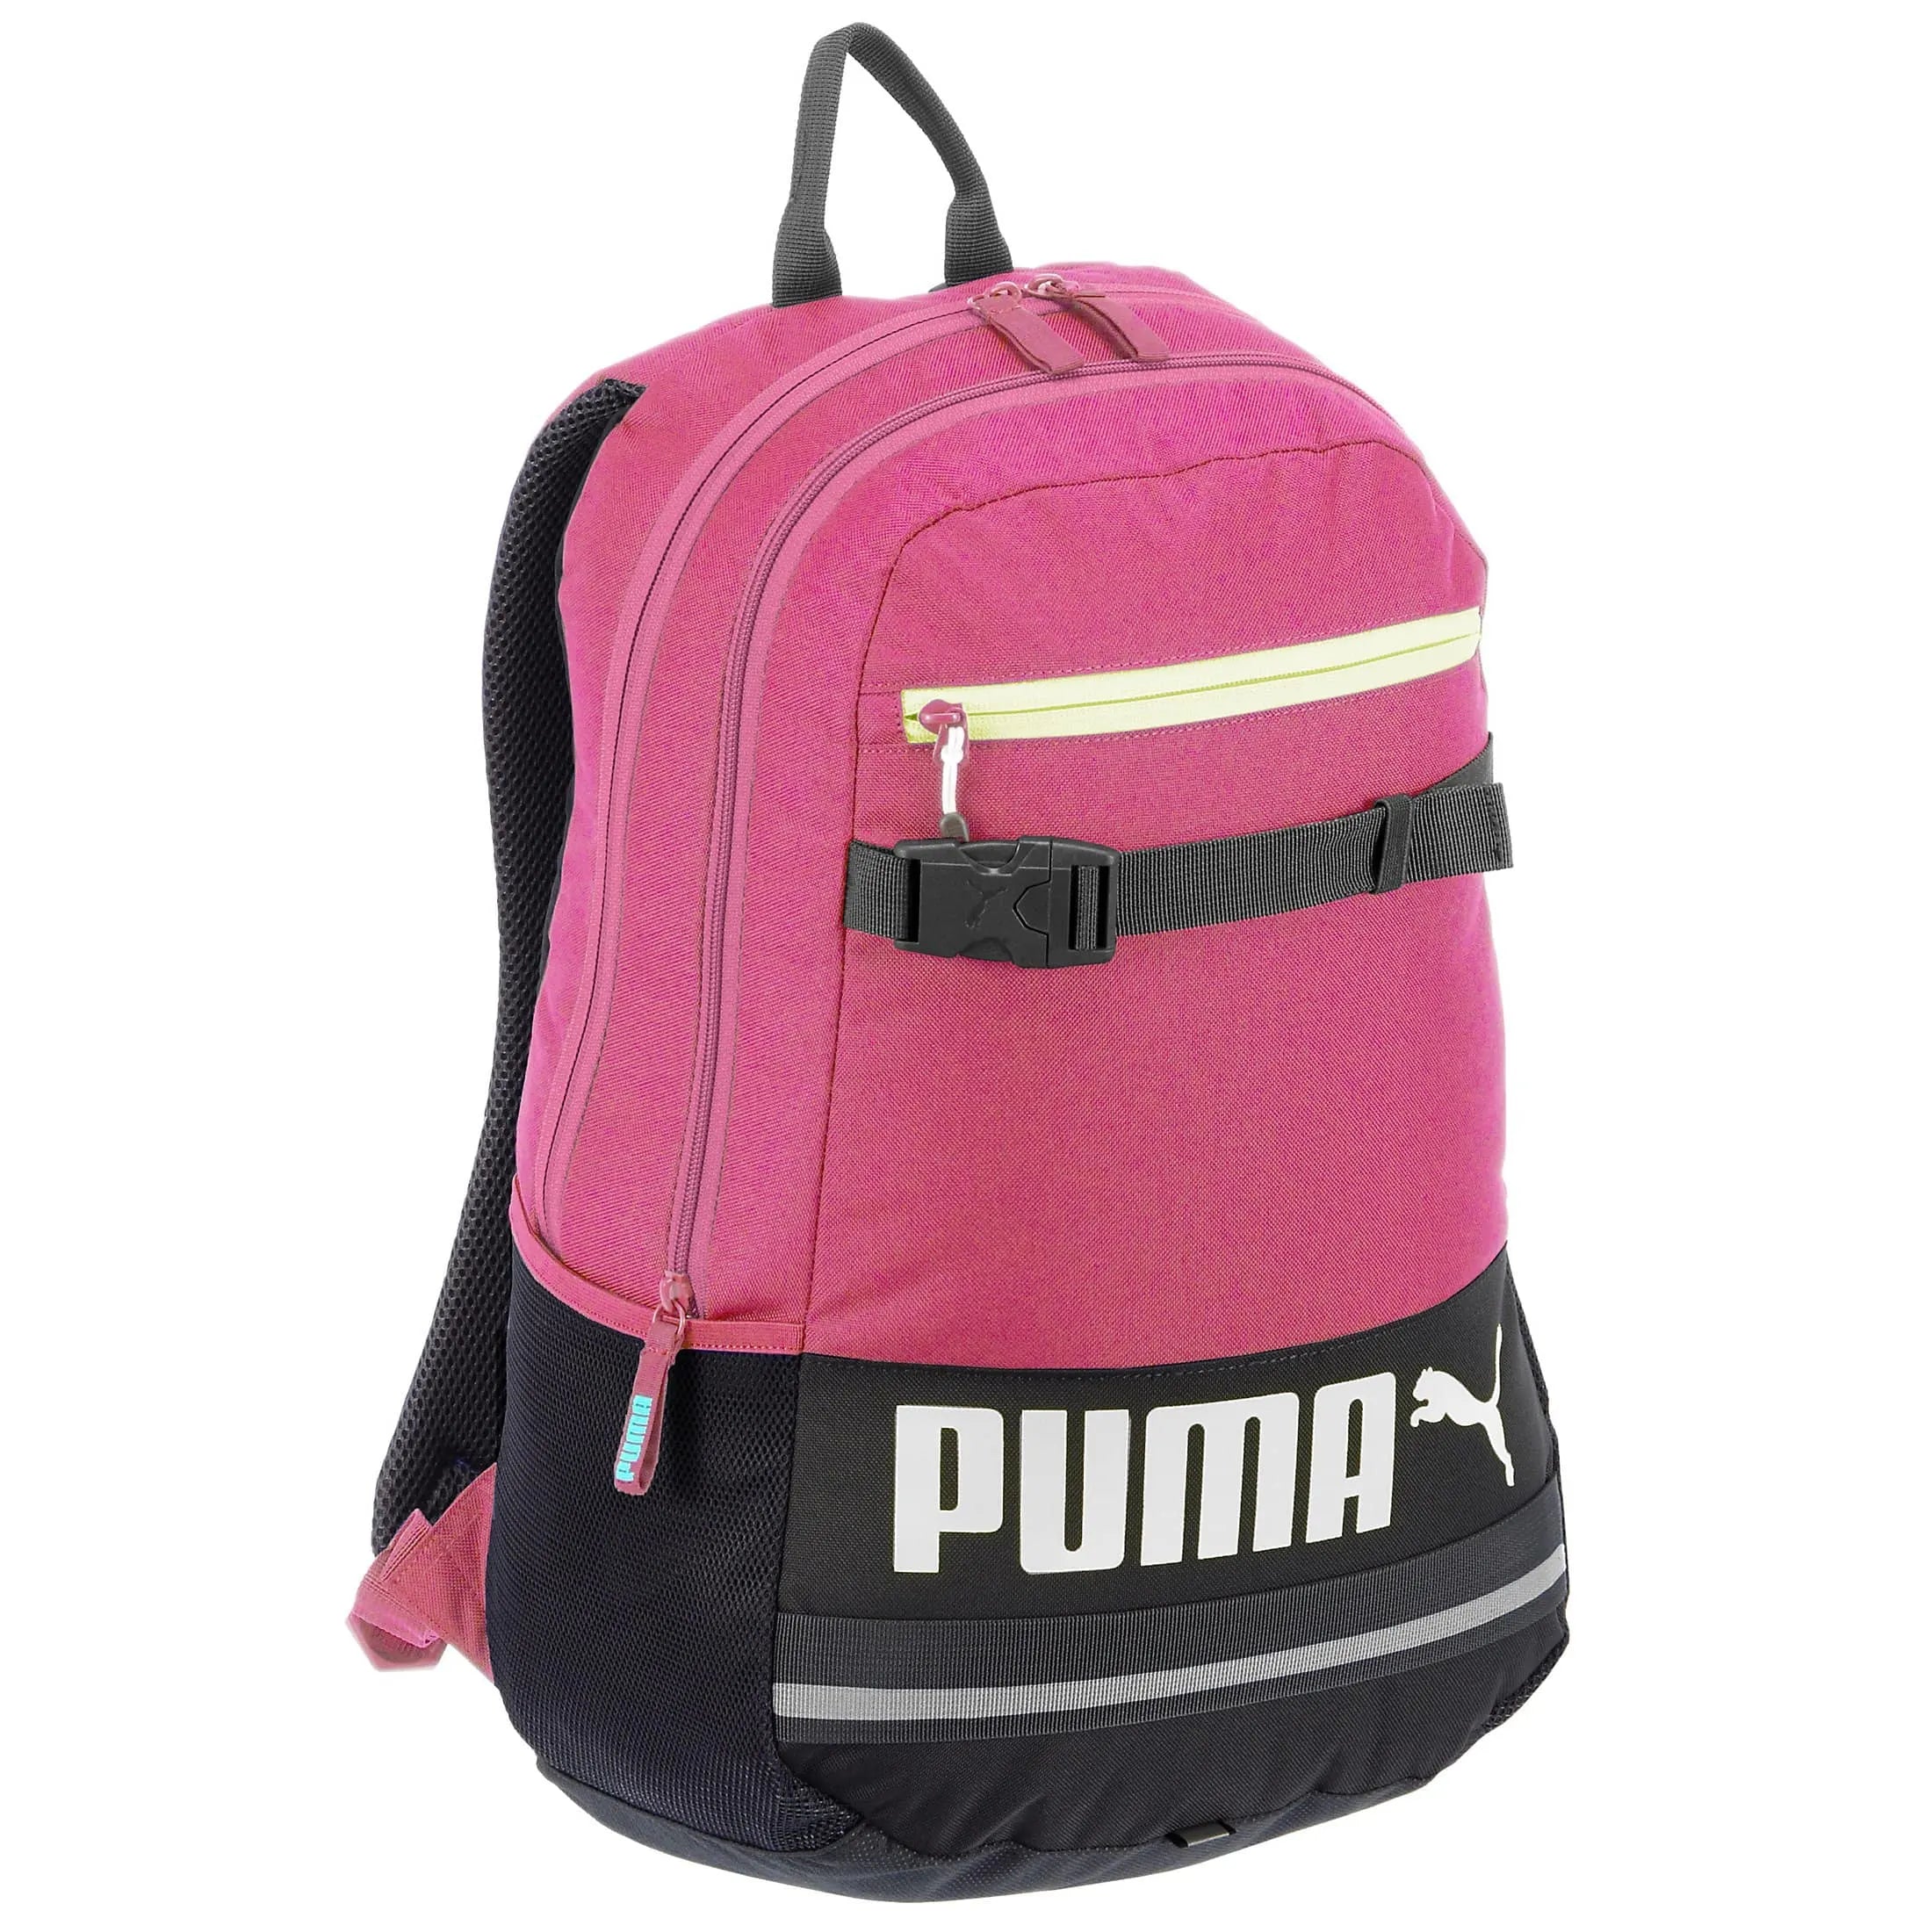 Puma Deck Backpack Rucksack mit Laptopfach 50 cm - fuchsia purple